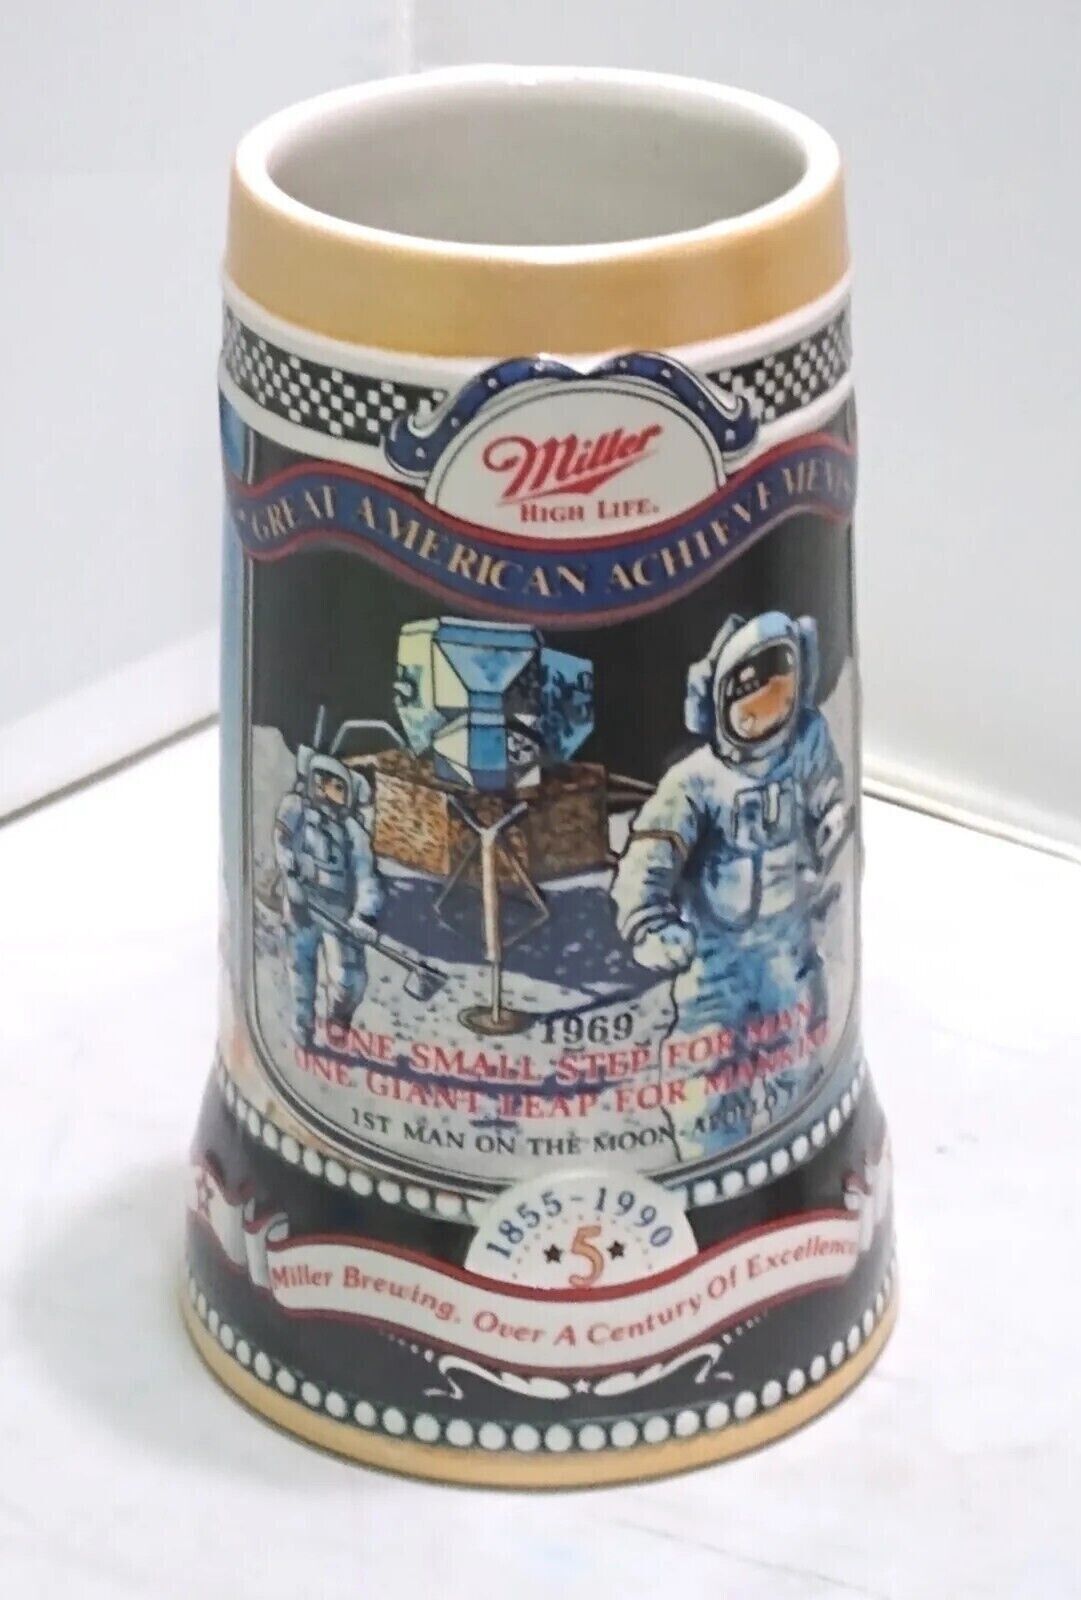 Miller High Life NASA 1855-1990 Beer Stein Mug 1969 Great American Achievements